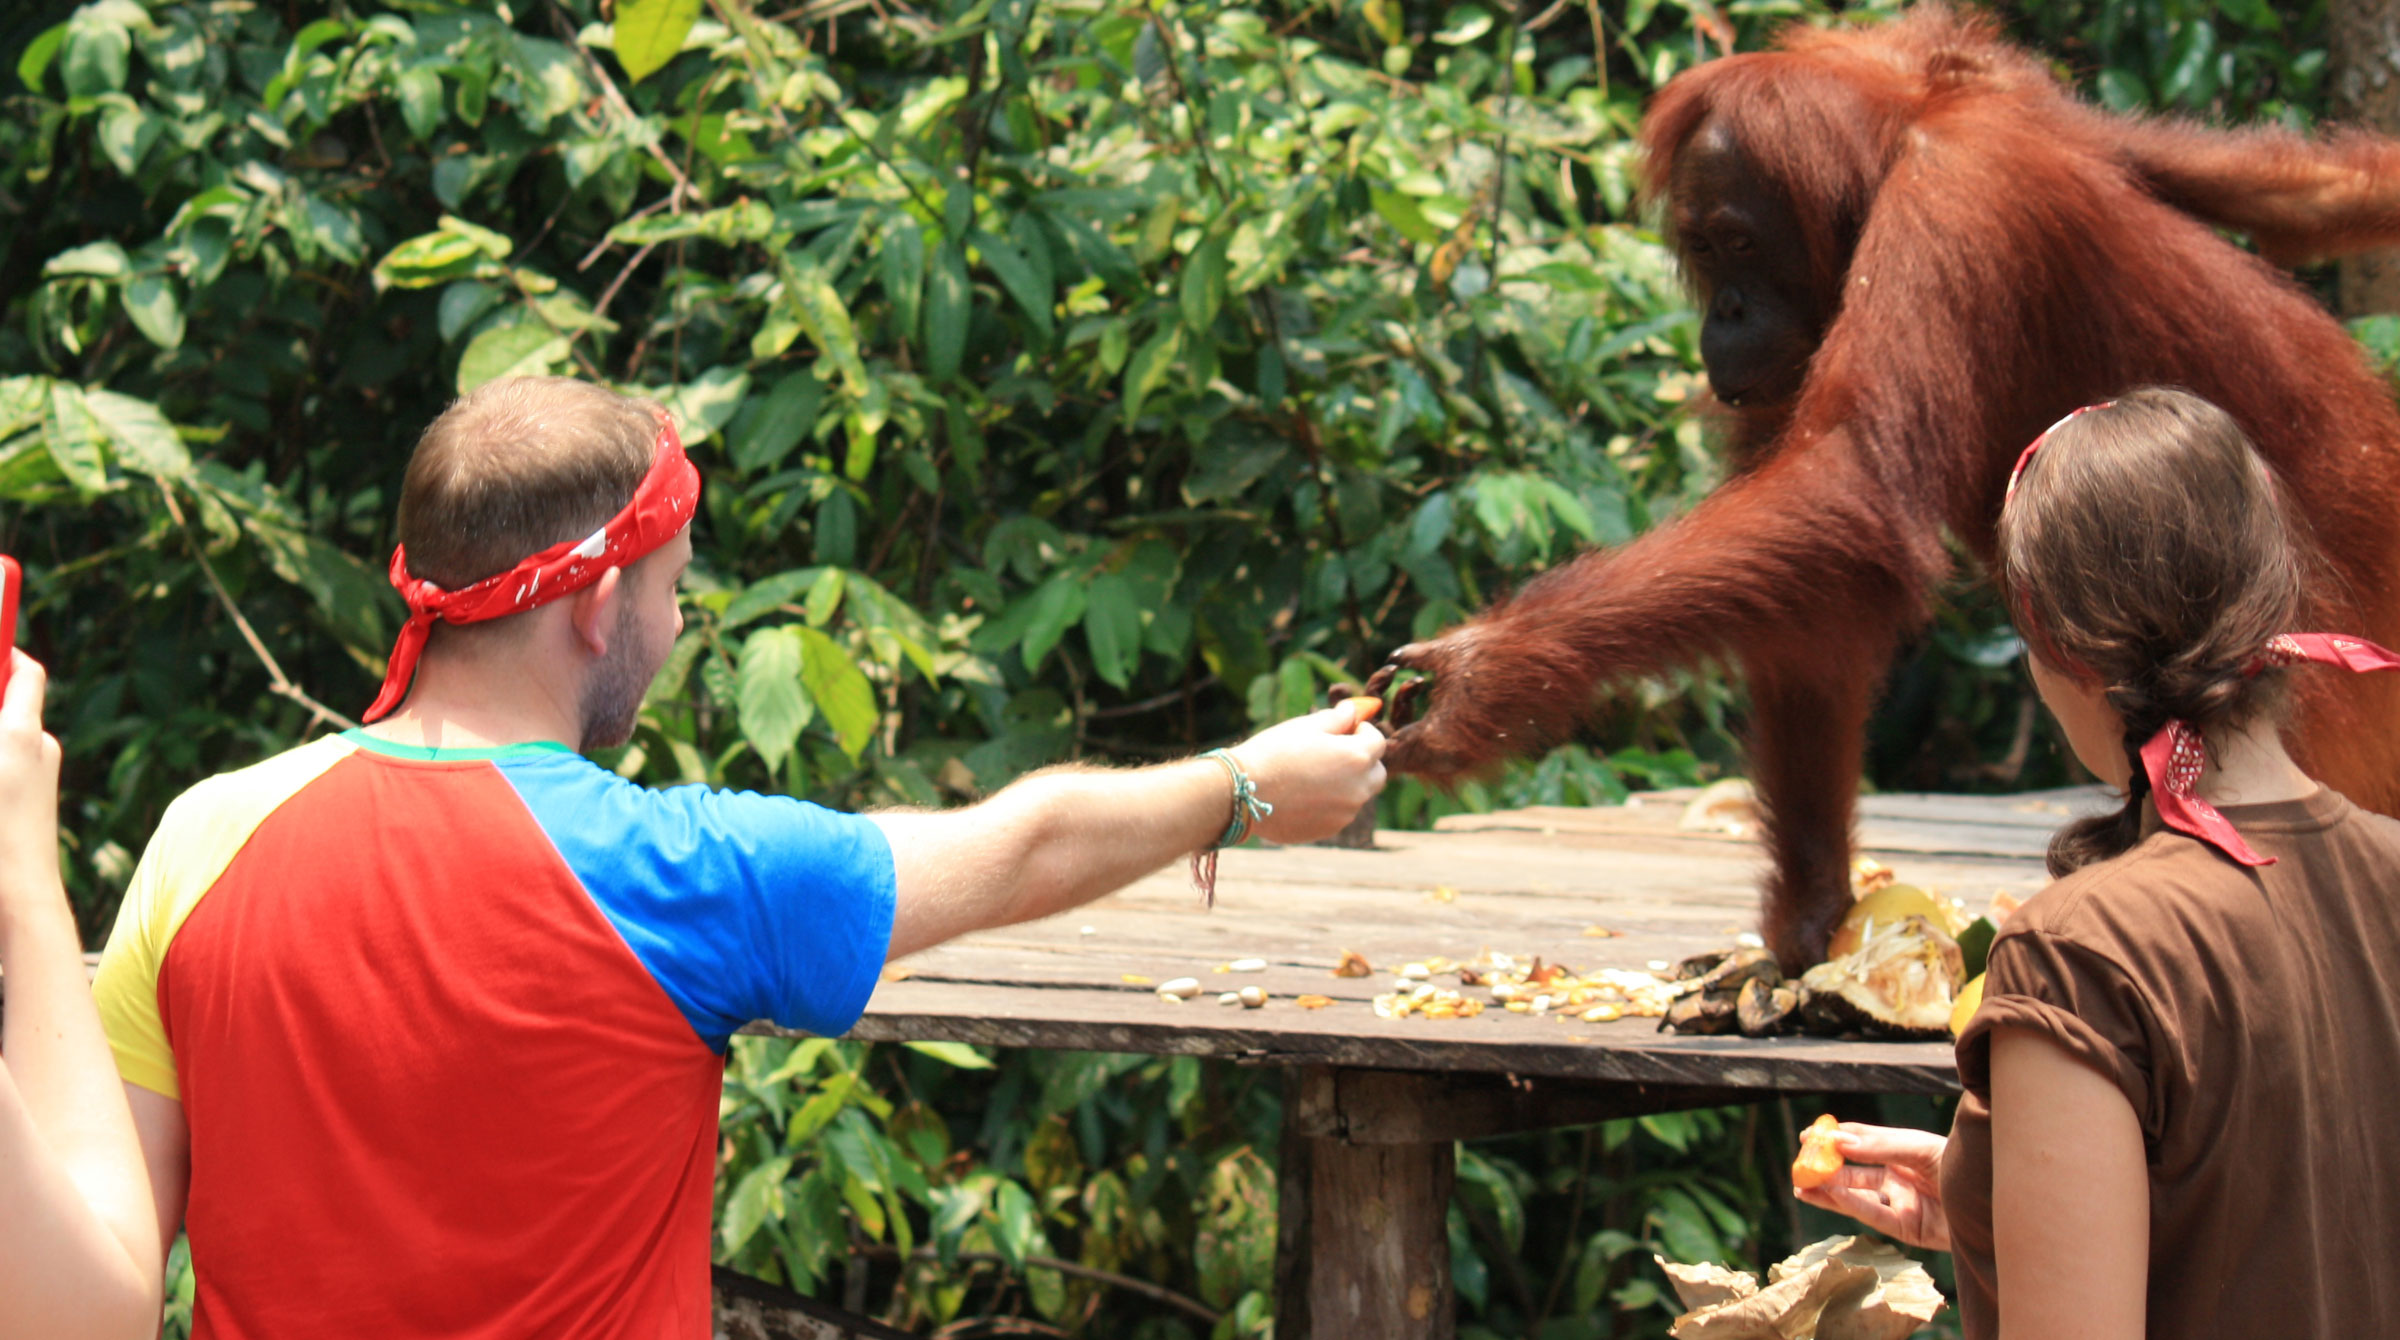 When Paul met Orangutans in the jungle